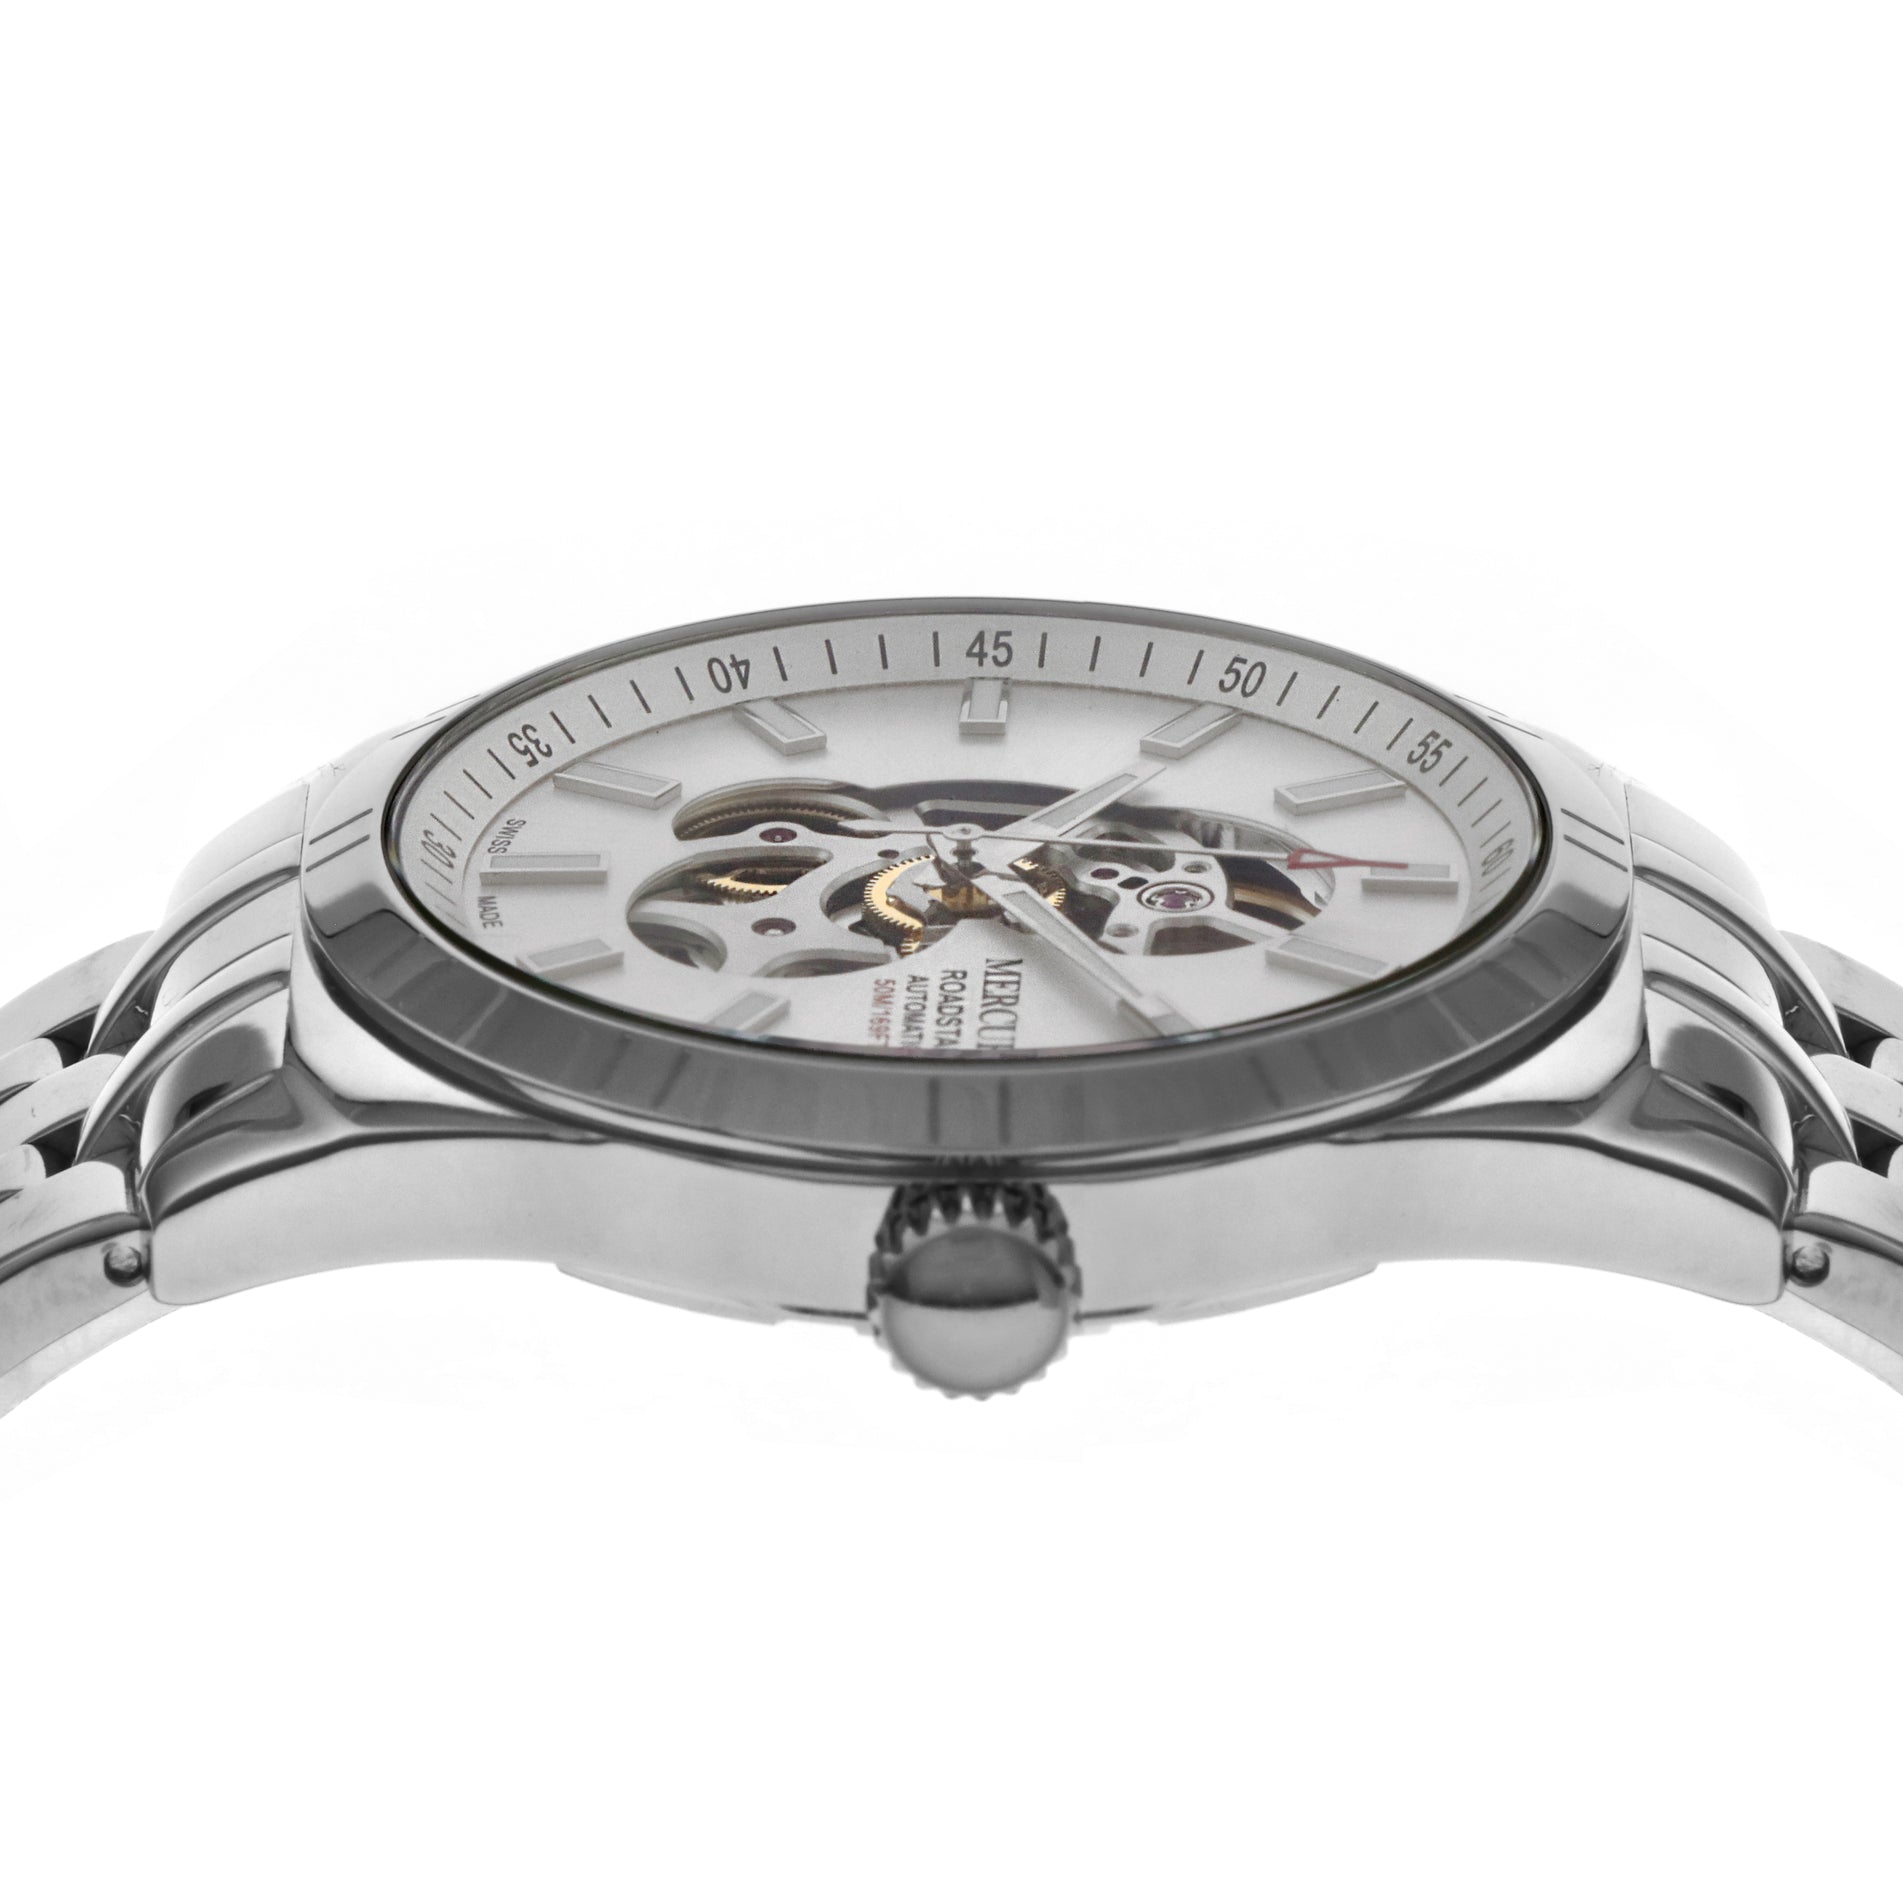 Mercury Men's Swiss Automatic Watch, White Dial - MER-0010